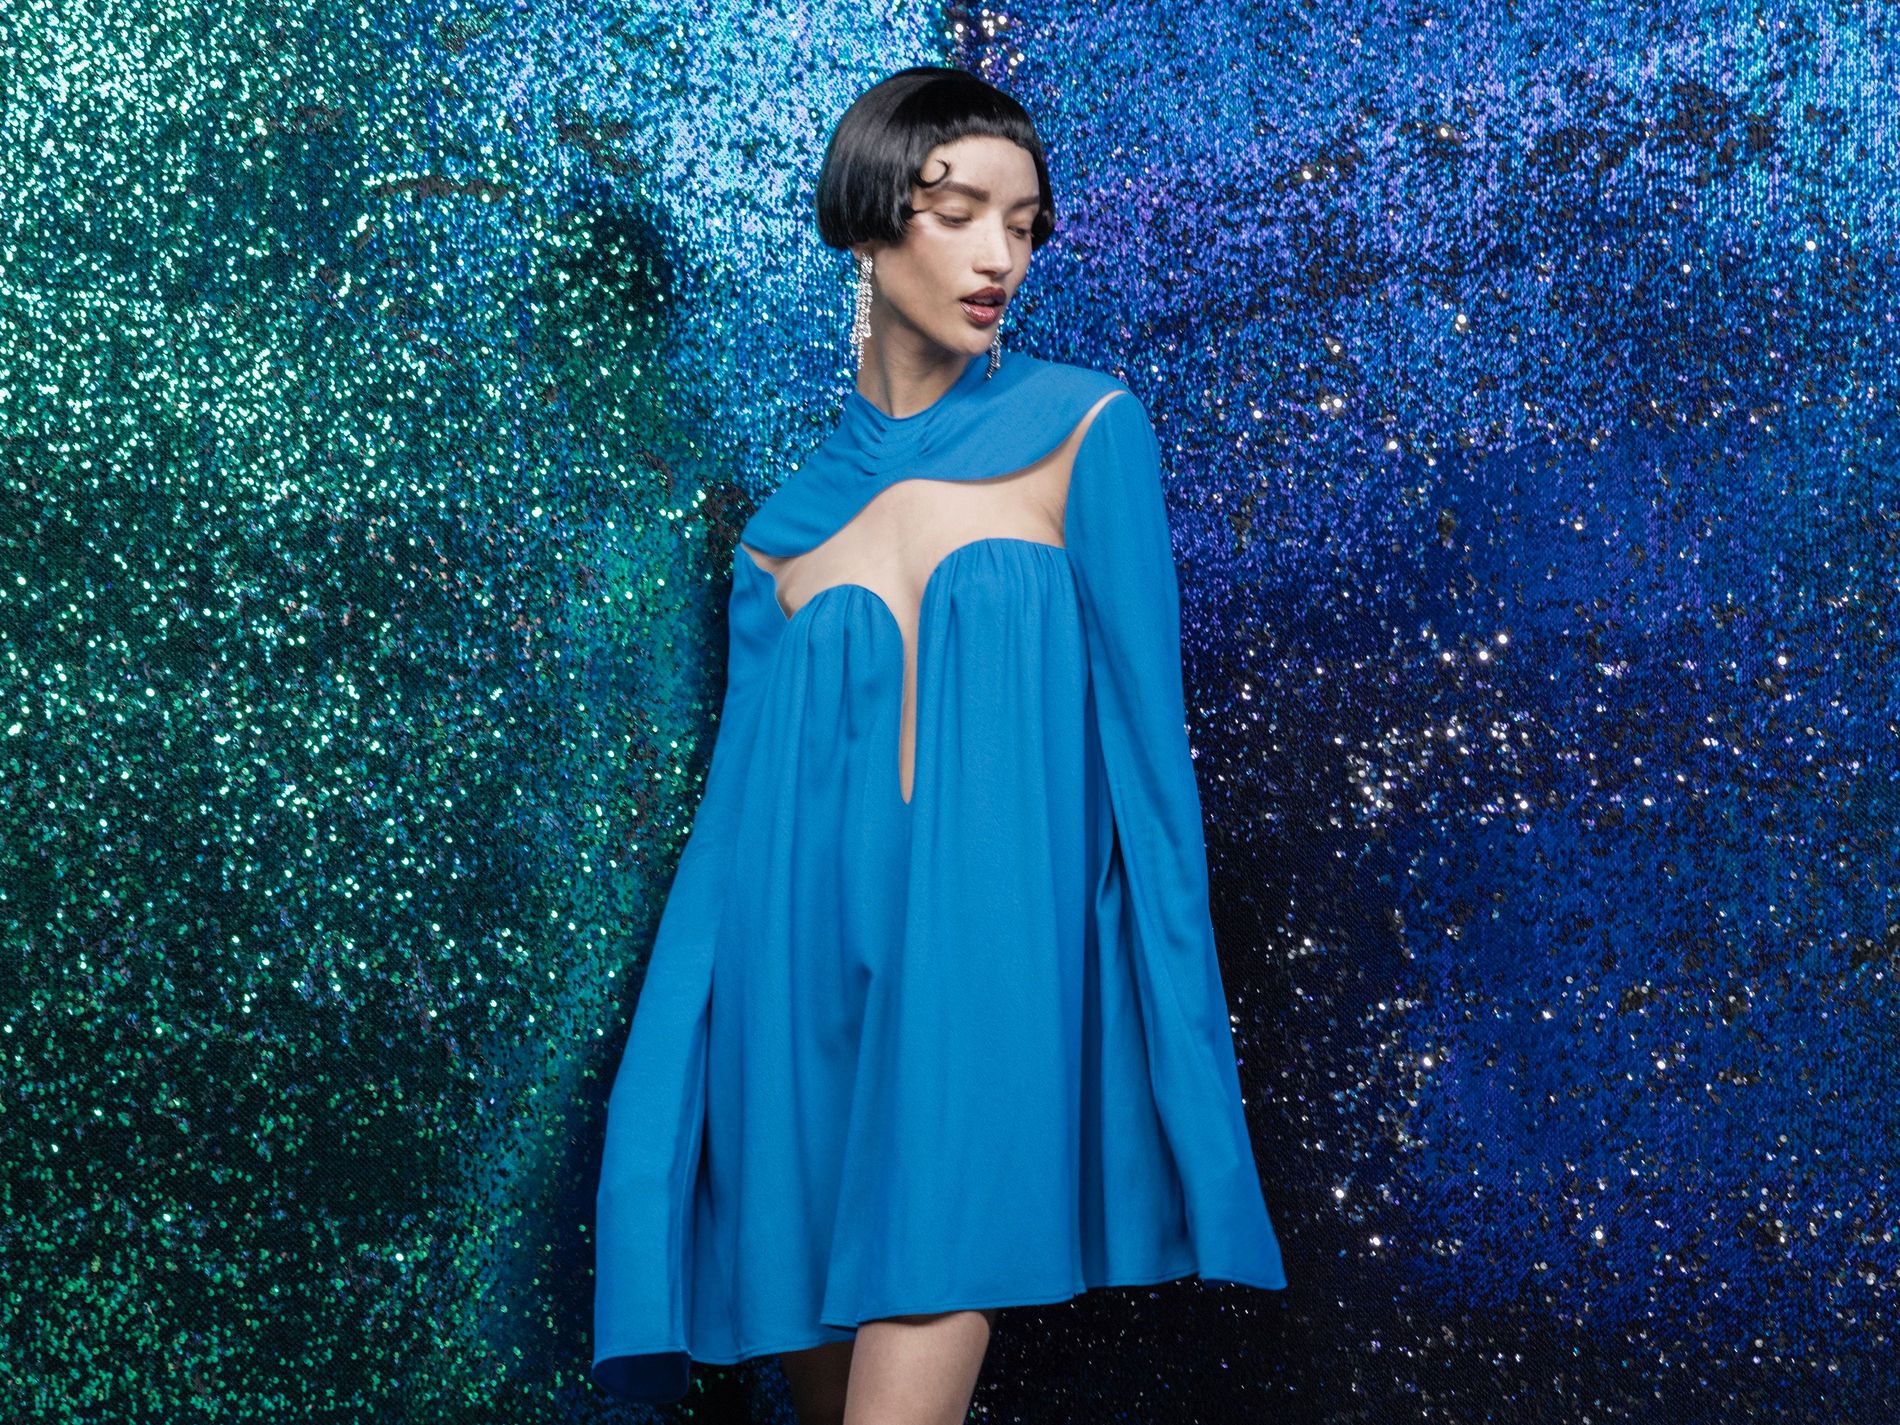 Blue Stella McCartney dress